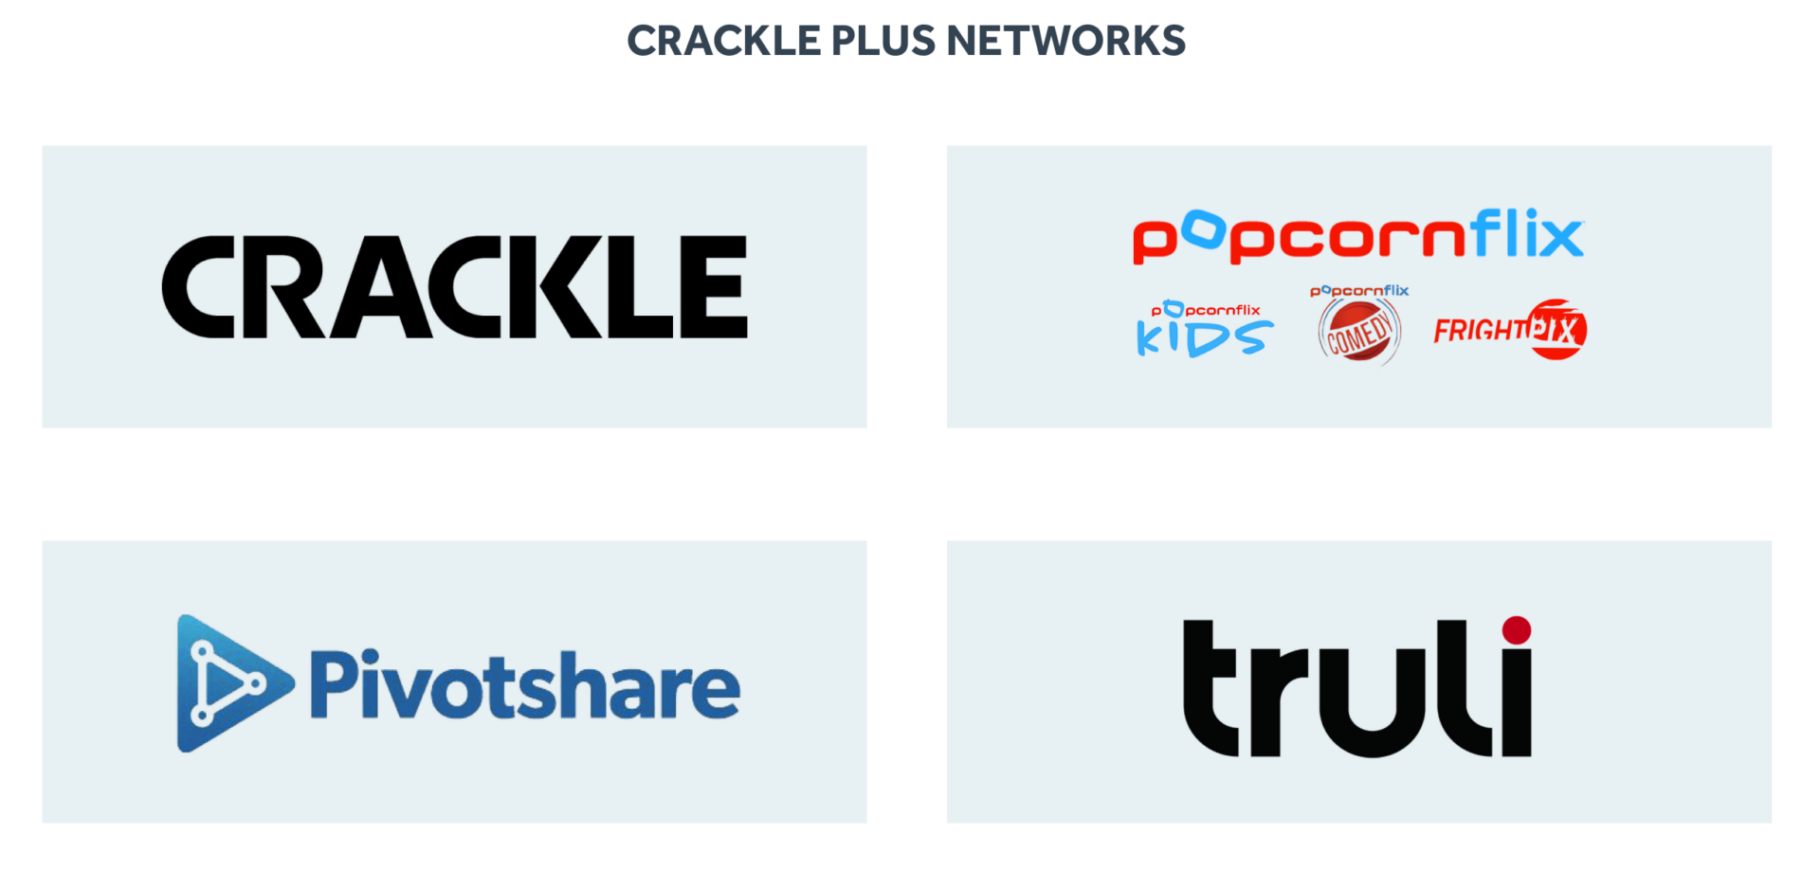 Crackle Plus Networks